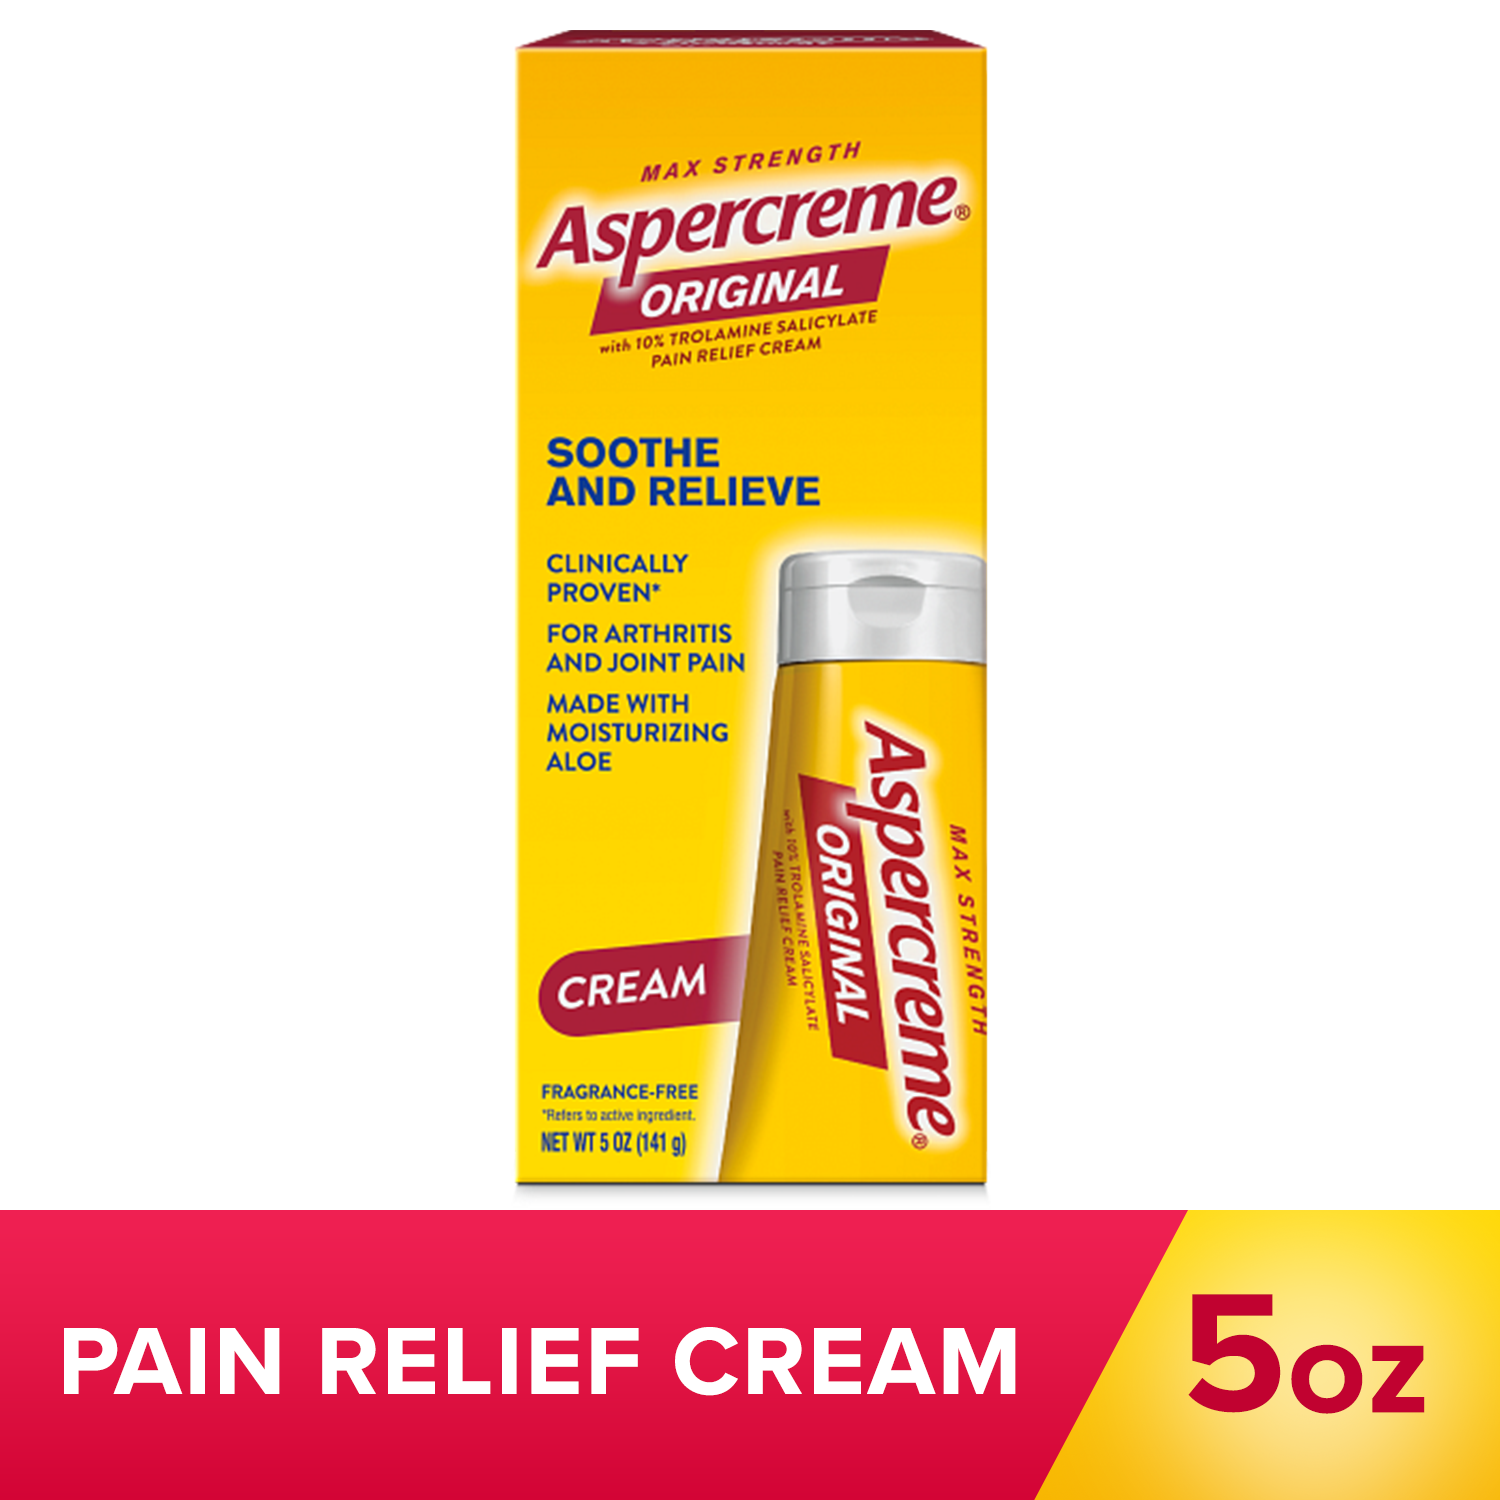 Aspercreme Original Pain Relief Cream, 5 Oz. - image 1 of 9